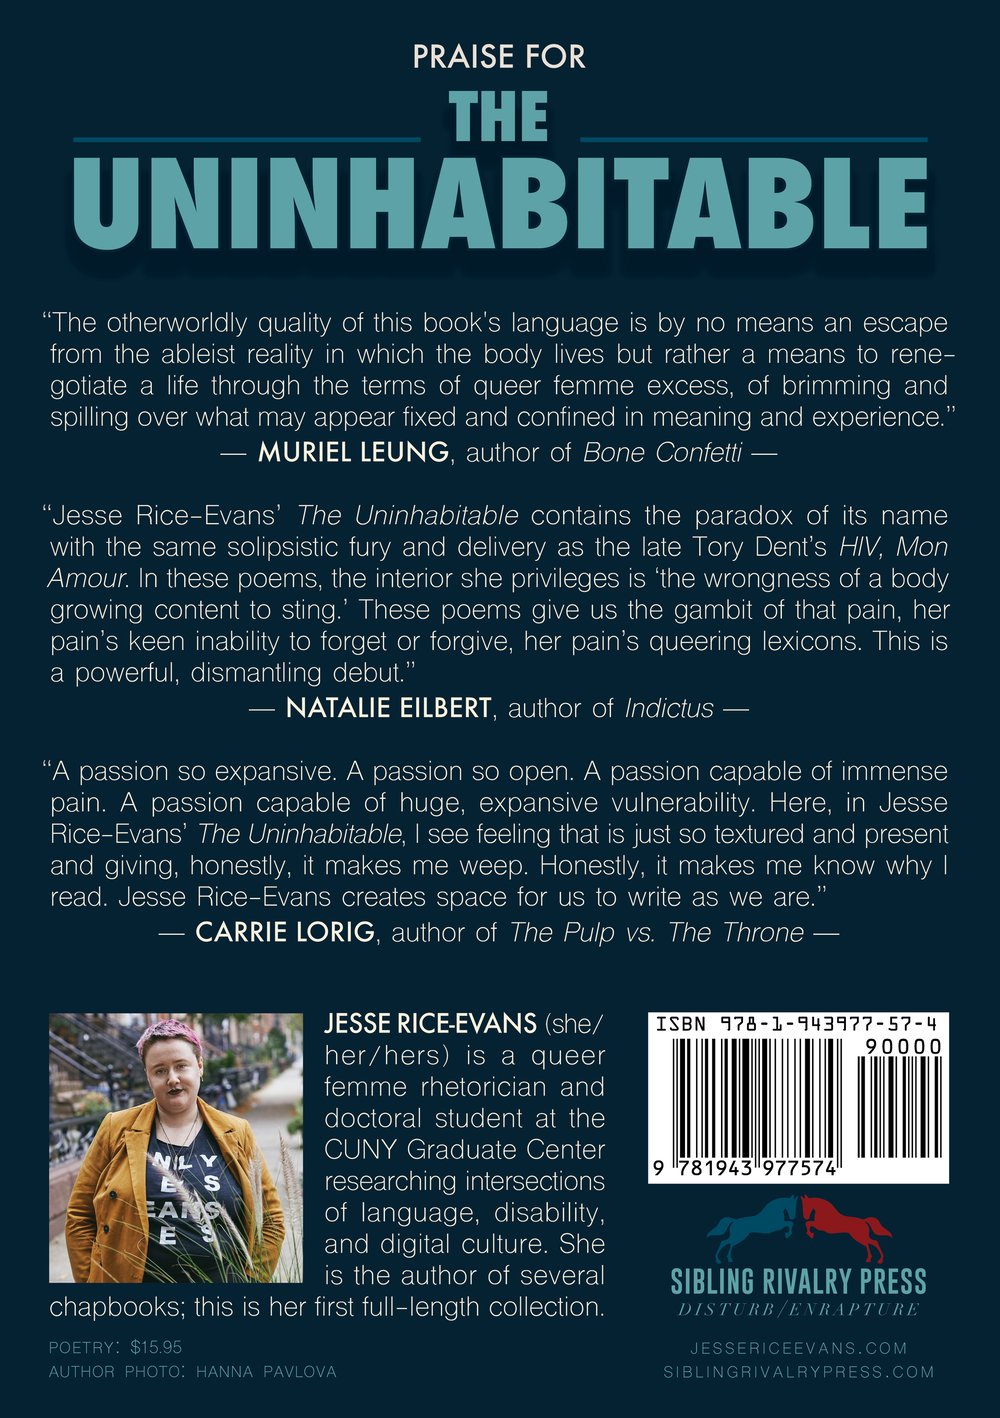 The Uninhabitable by Jesse Rice-Evans